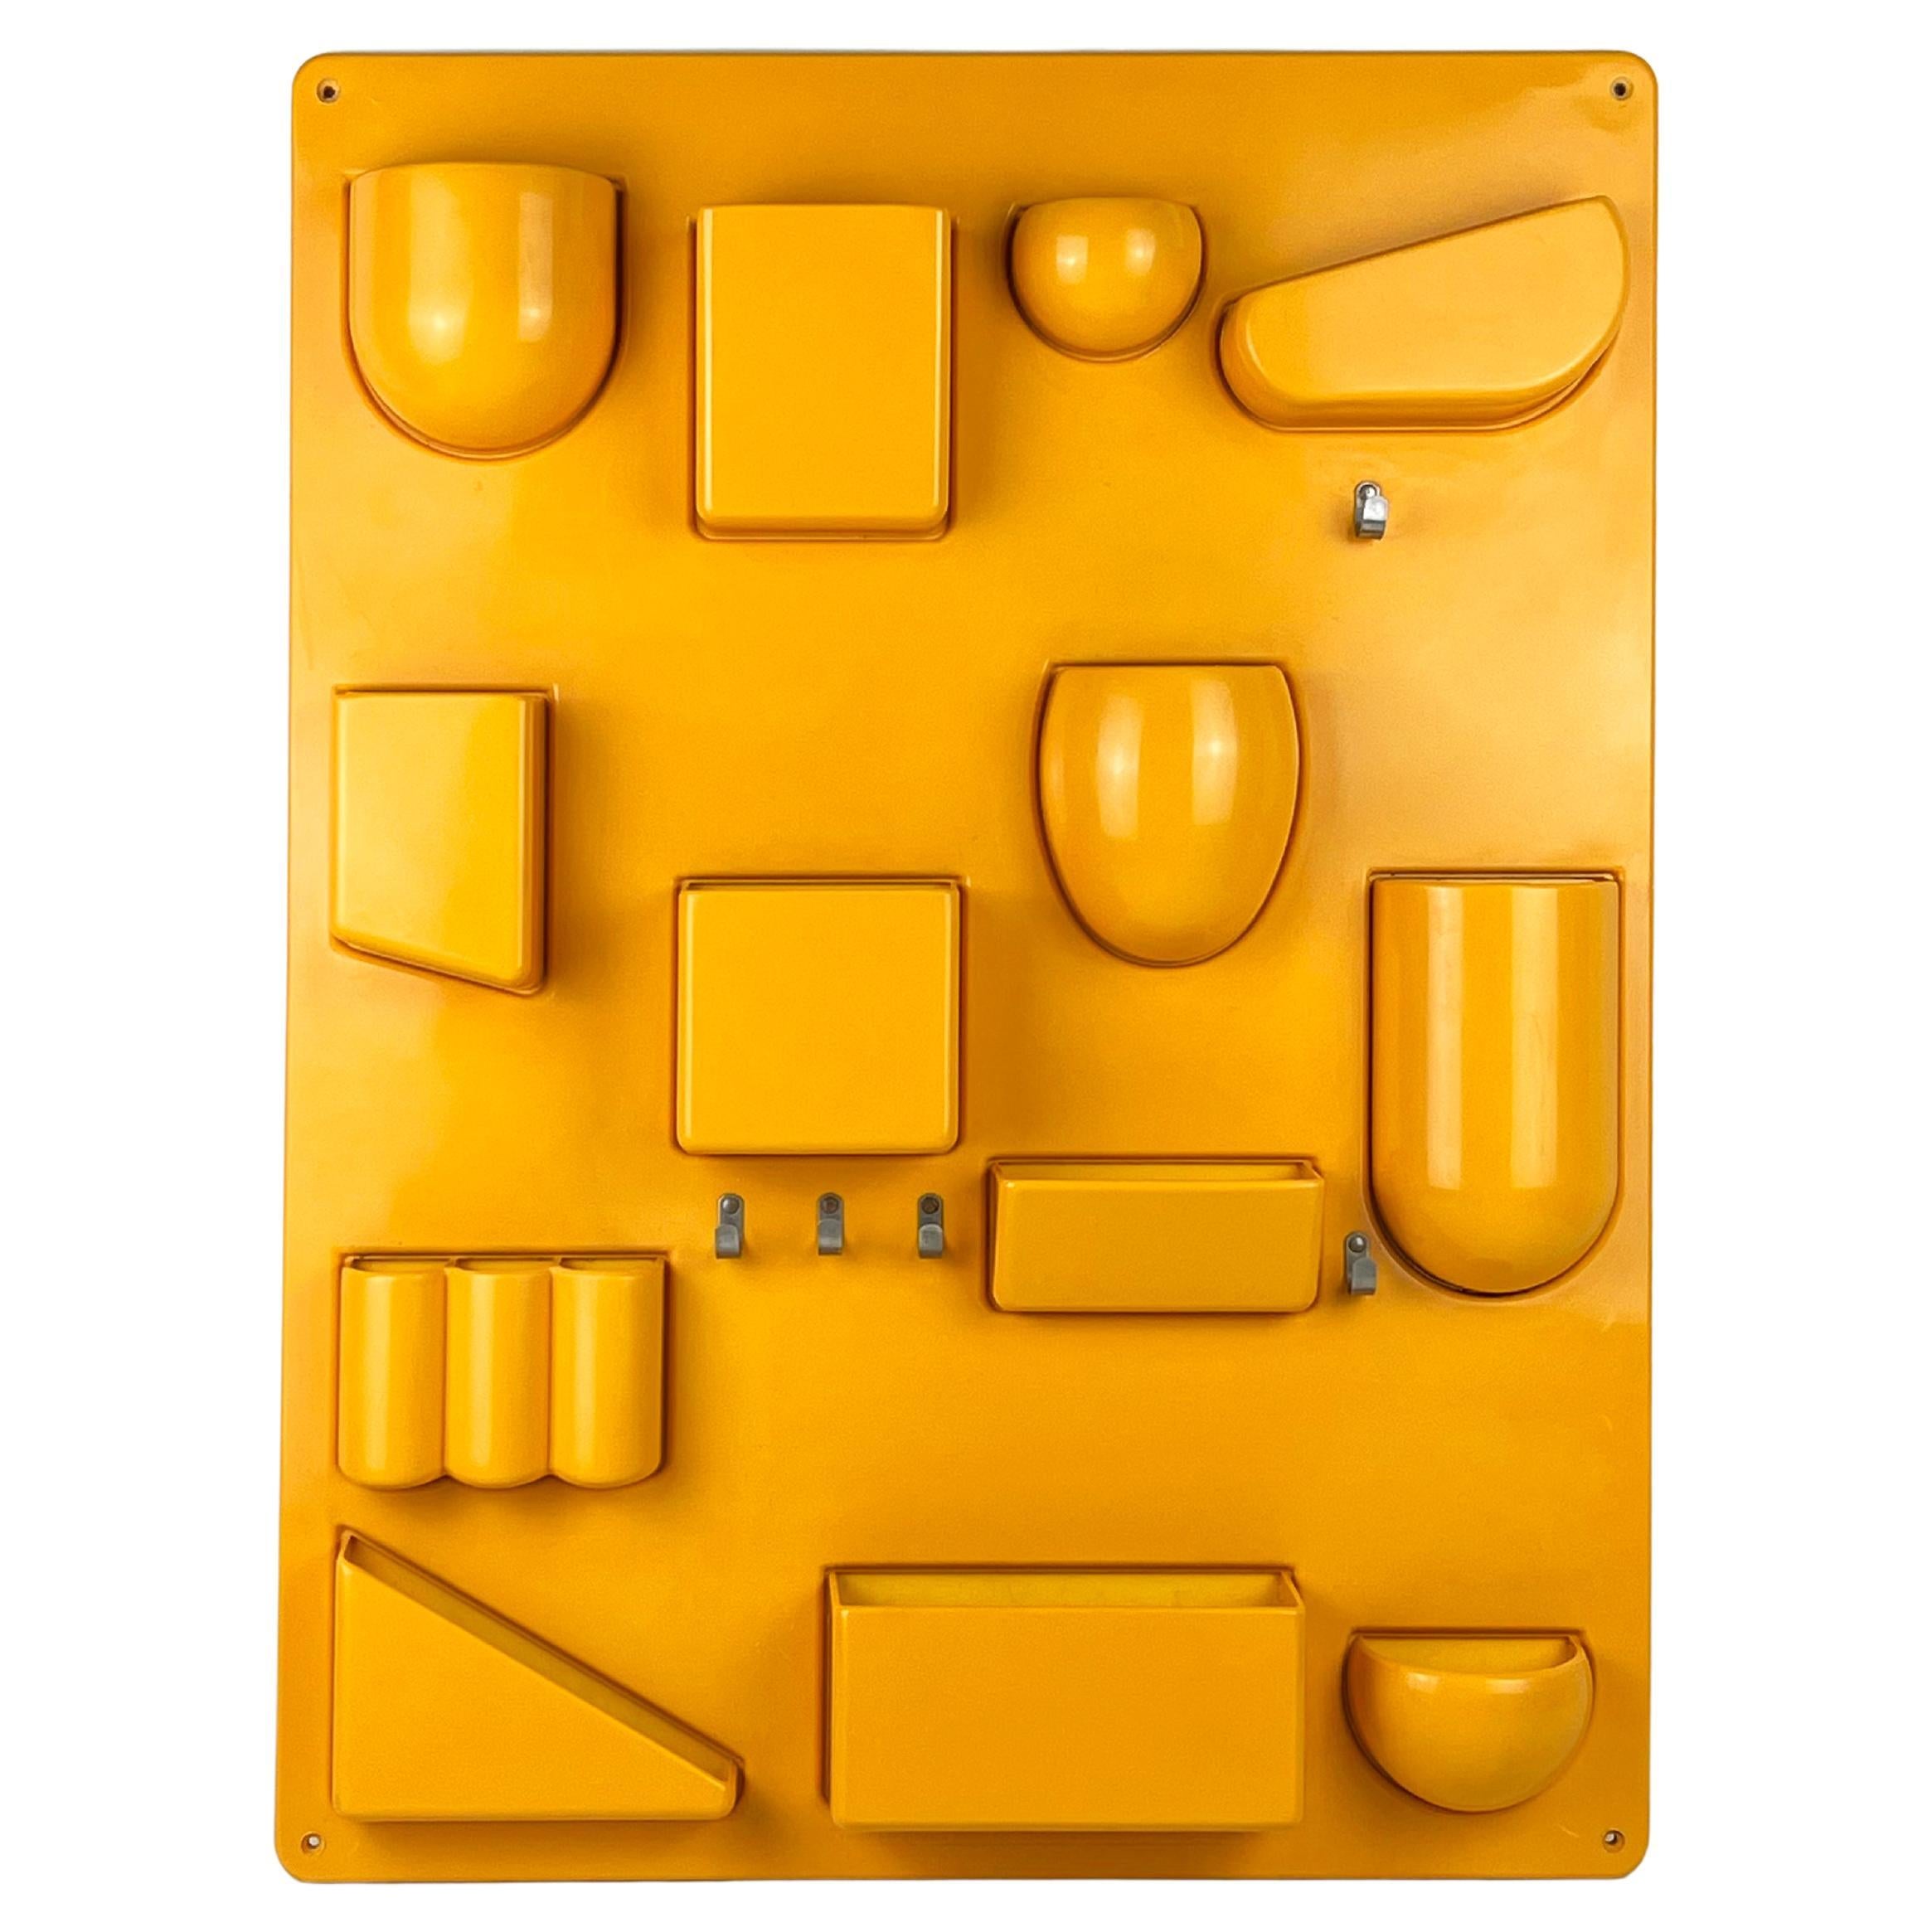 Yellow “Utensilo” Plastic Wall Storage Unit designed by Dorothee Maurer Becker 